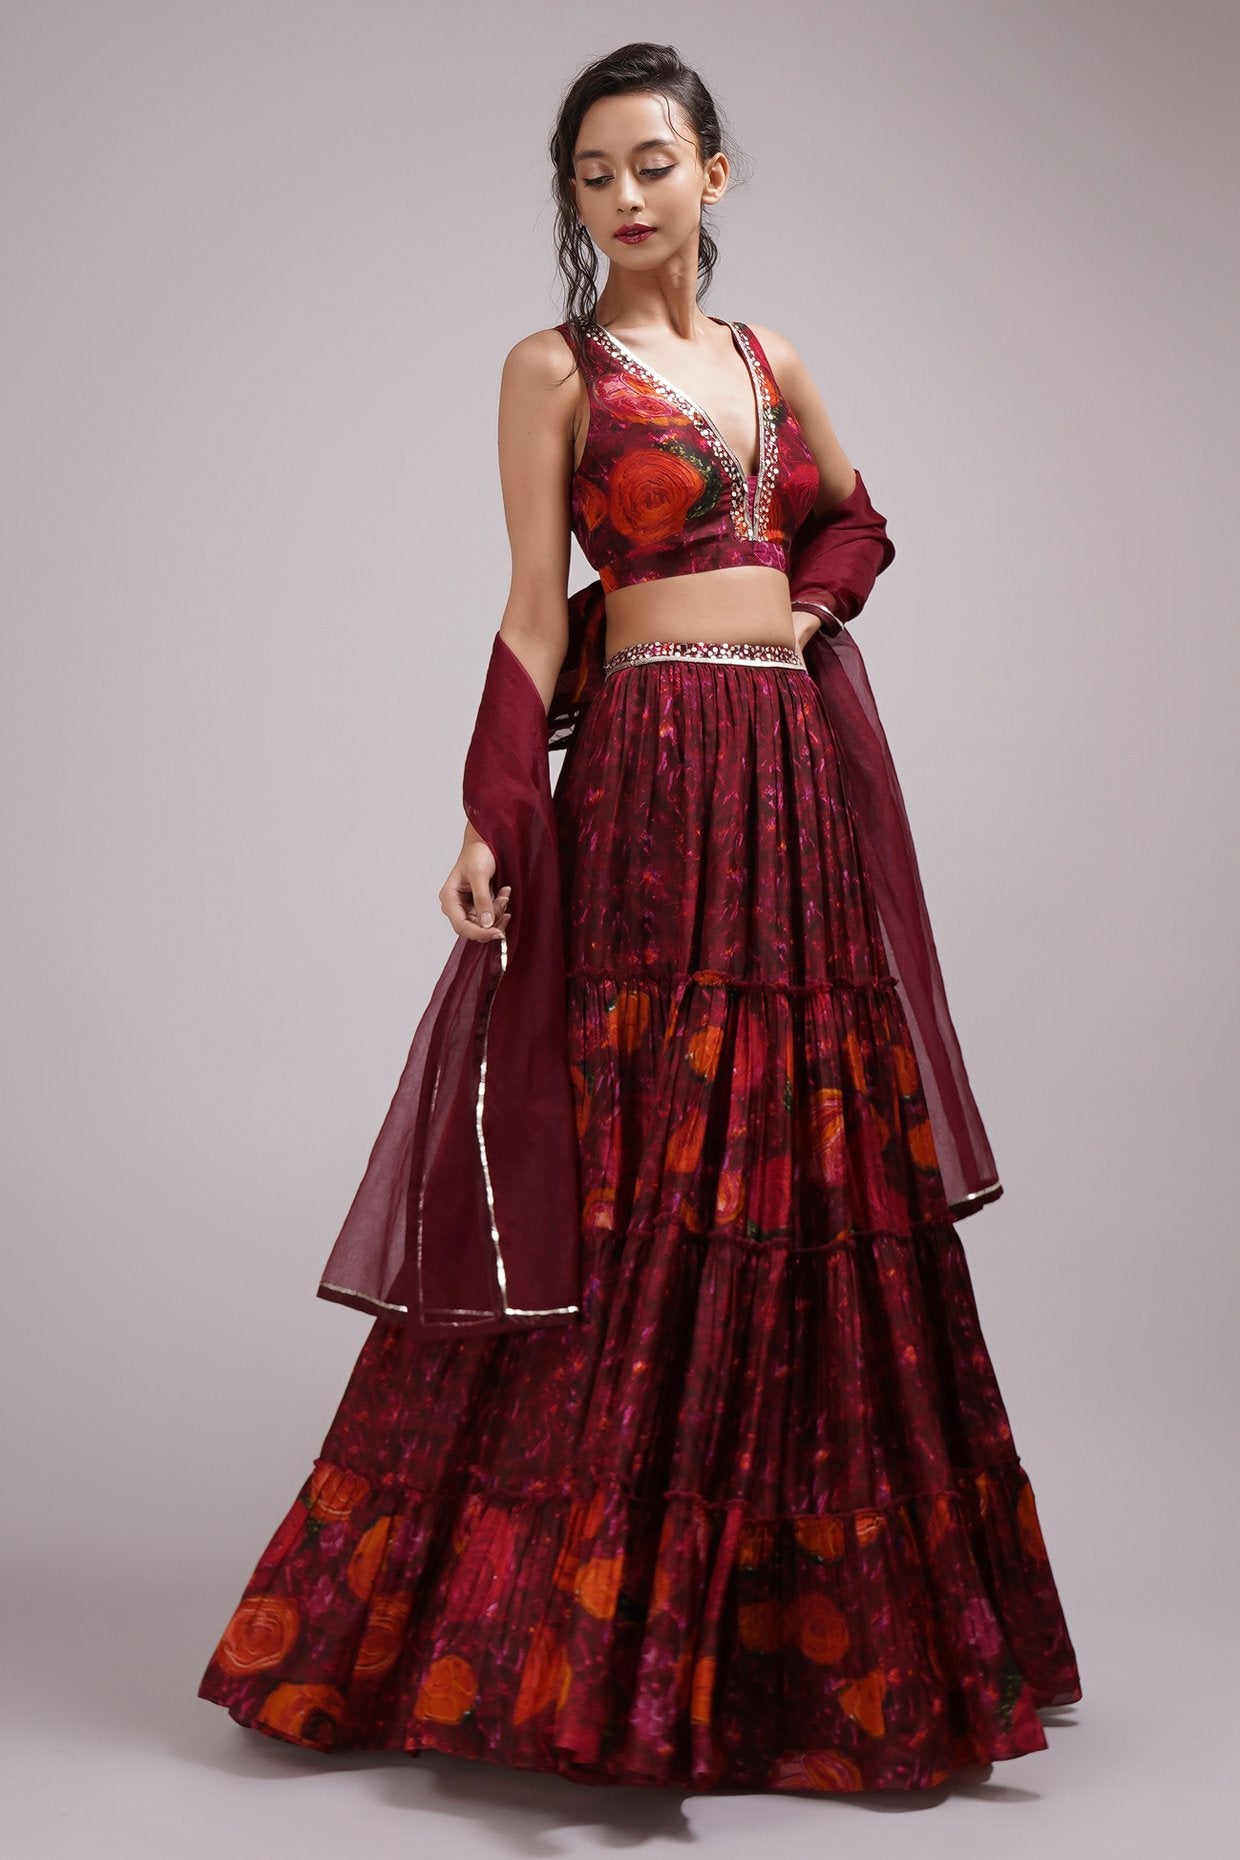 LEHENGA CHOLI WOMEN LEHNGA BLOUSE SKIRT SARI TOP SAREE INDIAN PAKISTANI  DRESS | eBay